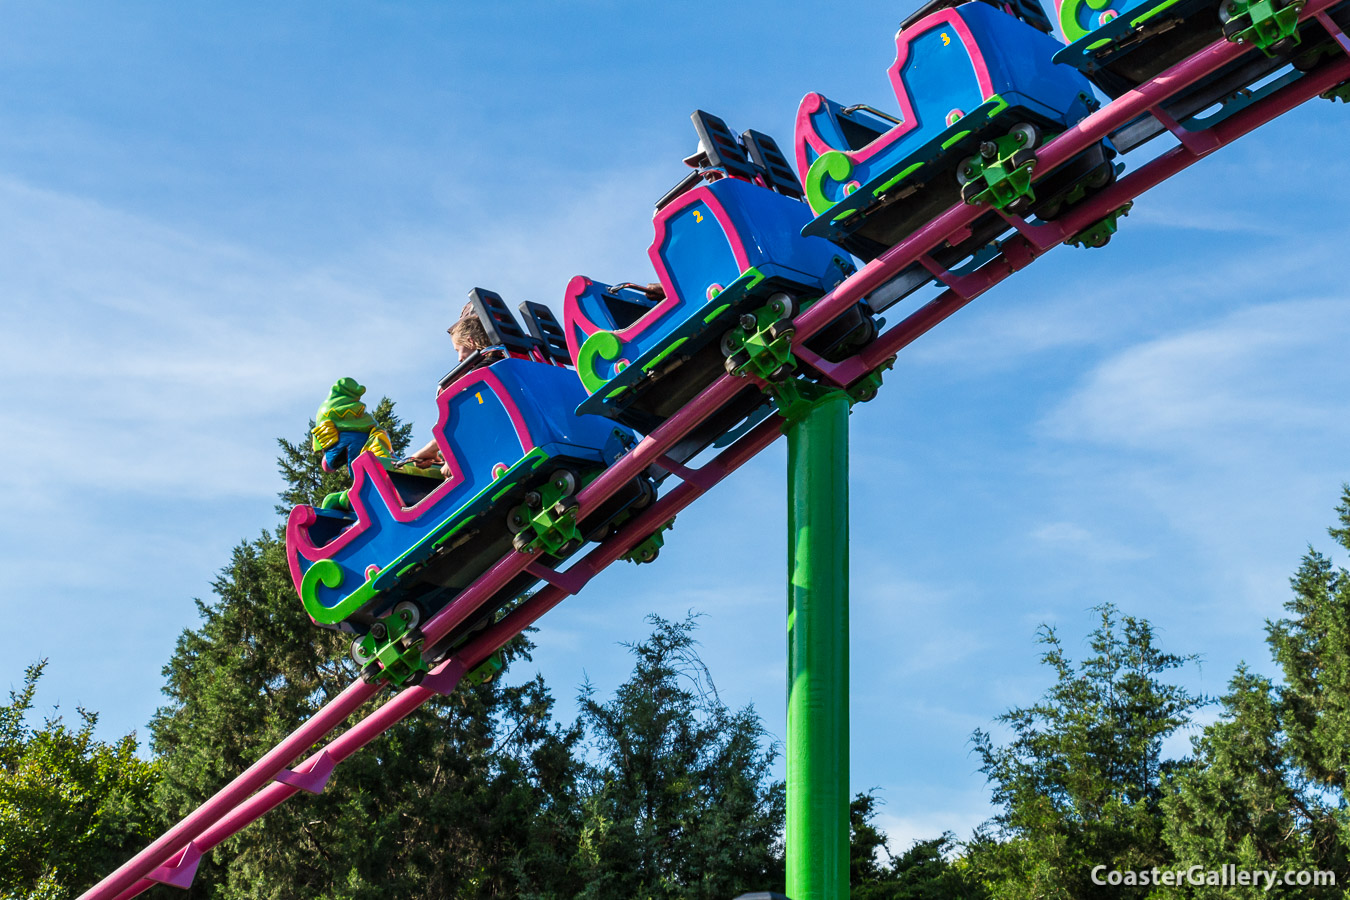 Grover's Alpine Express roller coaster at Busch Gardens